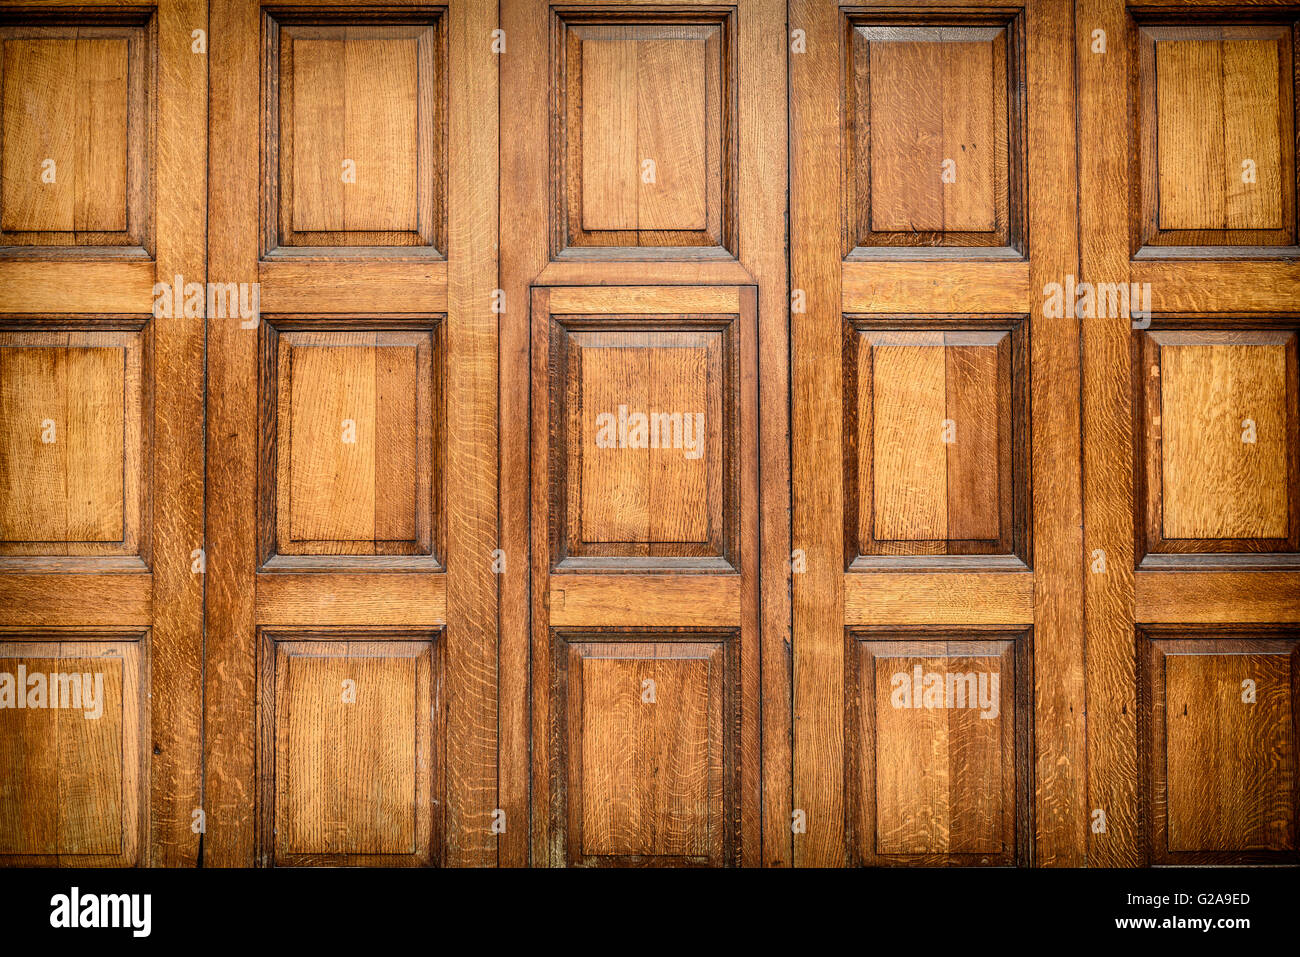 Wood paneling interior -Fotos und -Bildmaterial in hoher Auflösung – Alamy